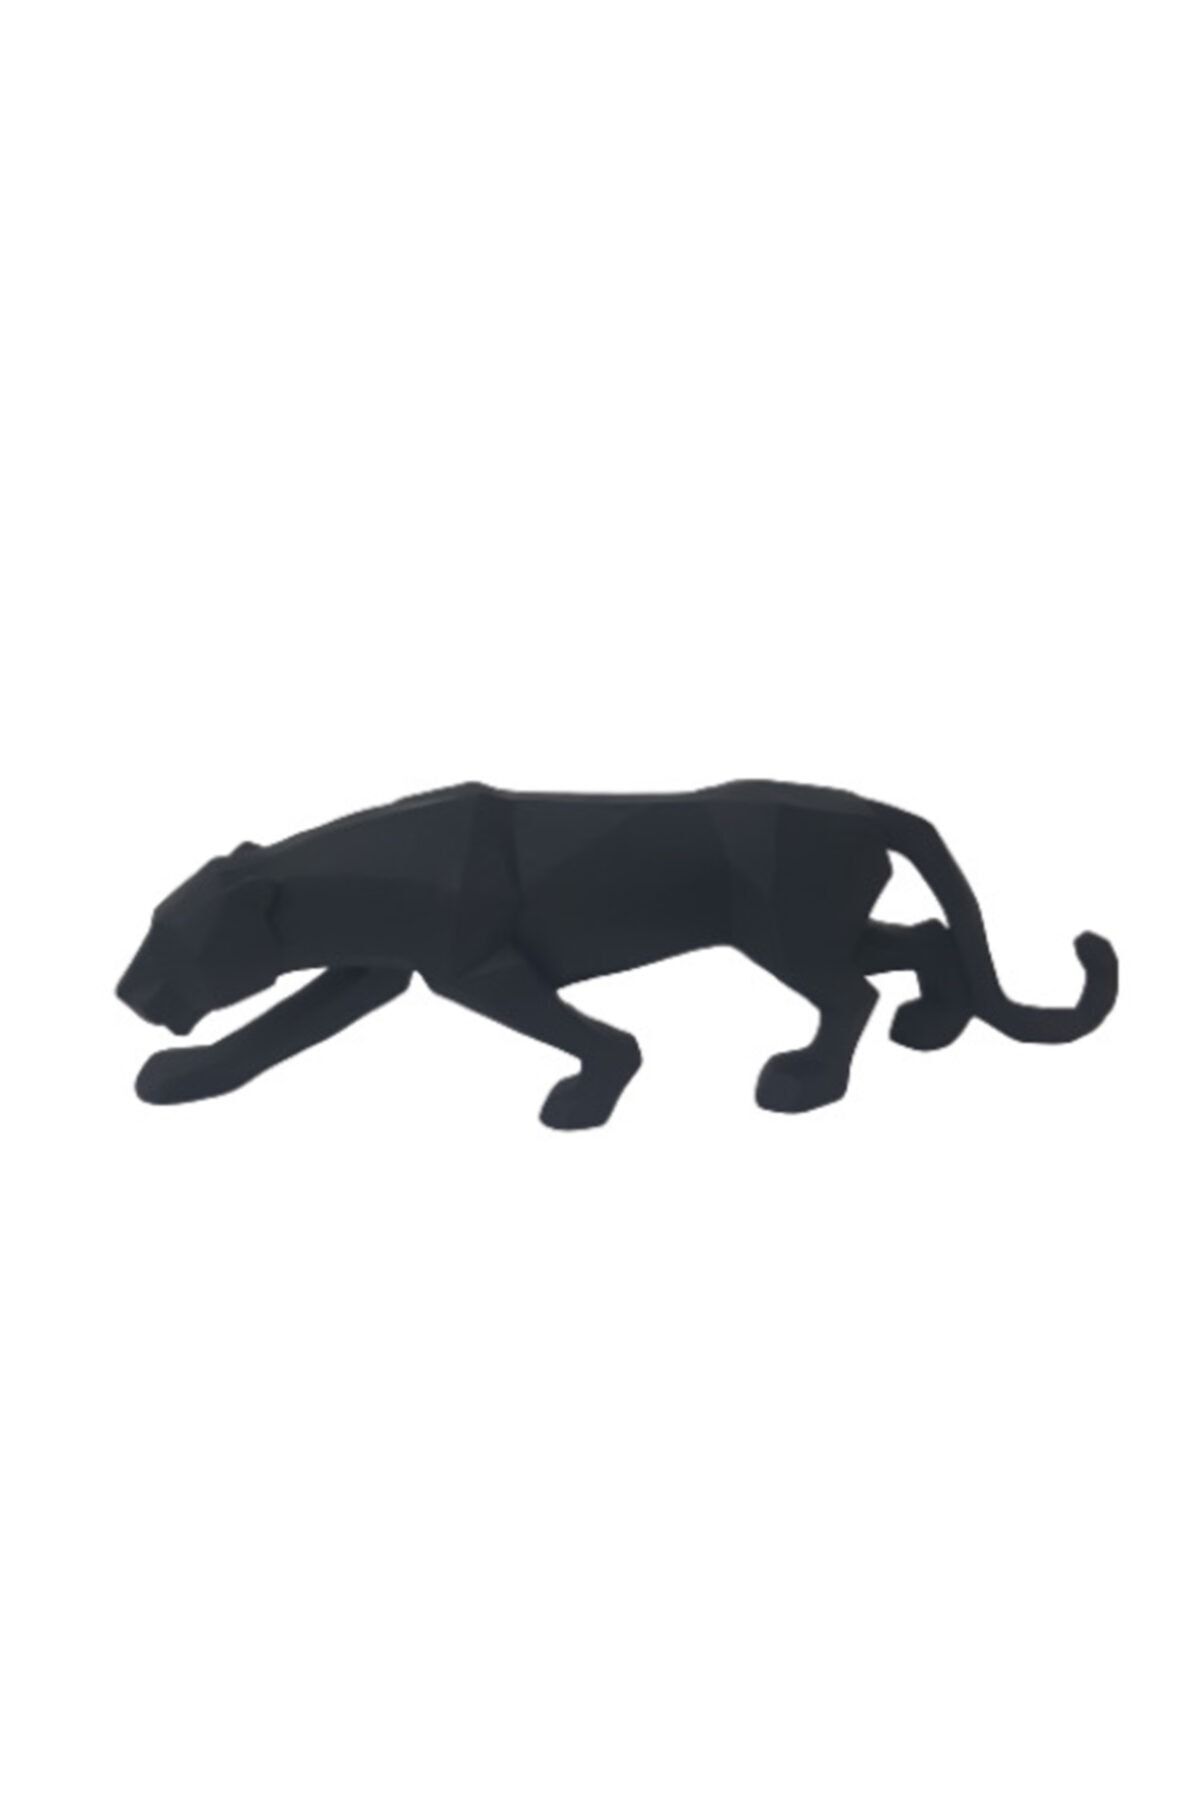 Arose Ab Ev Dekorasyon Kubik Jaguar Leopar Puma Dekor Ev Ofis Dekorasyonu